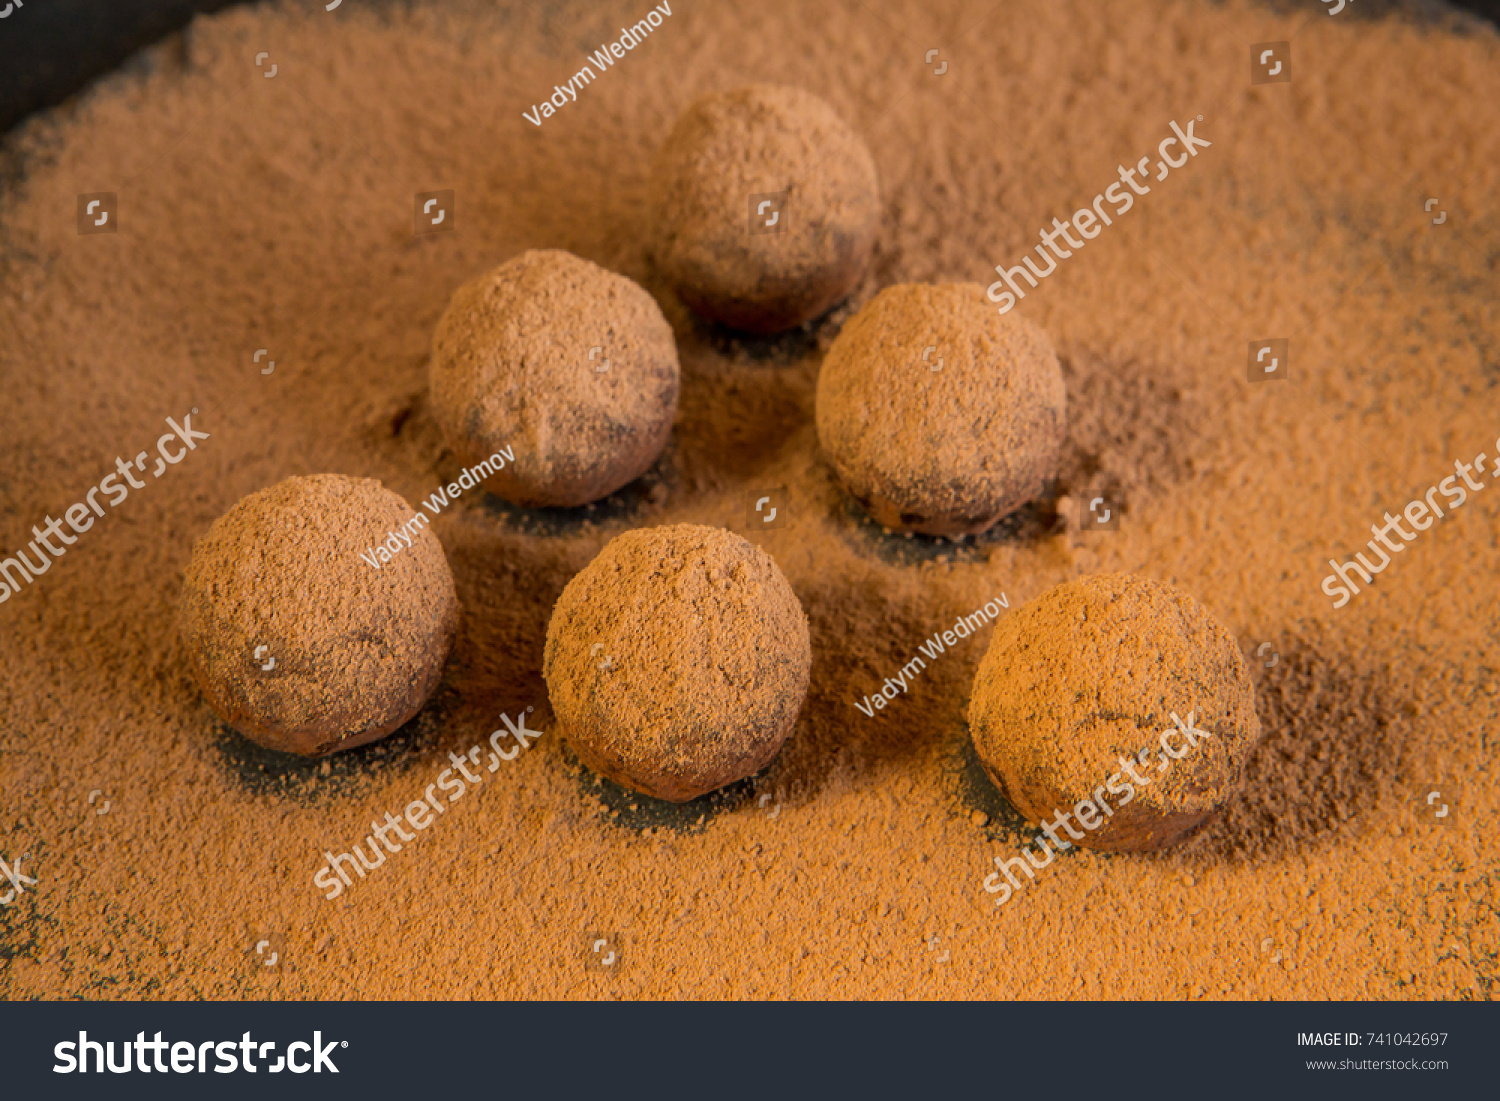 Chocolate truffle,Truffle chocolate candies with cocoa powder. #741042697